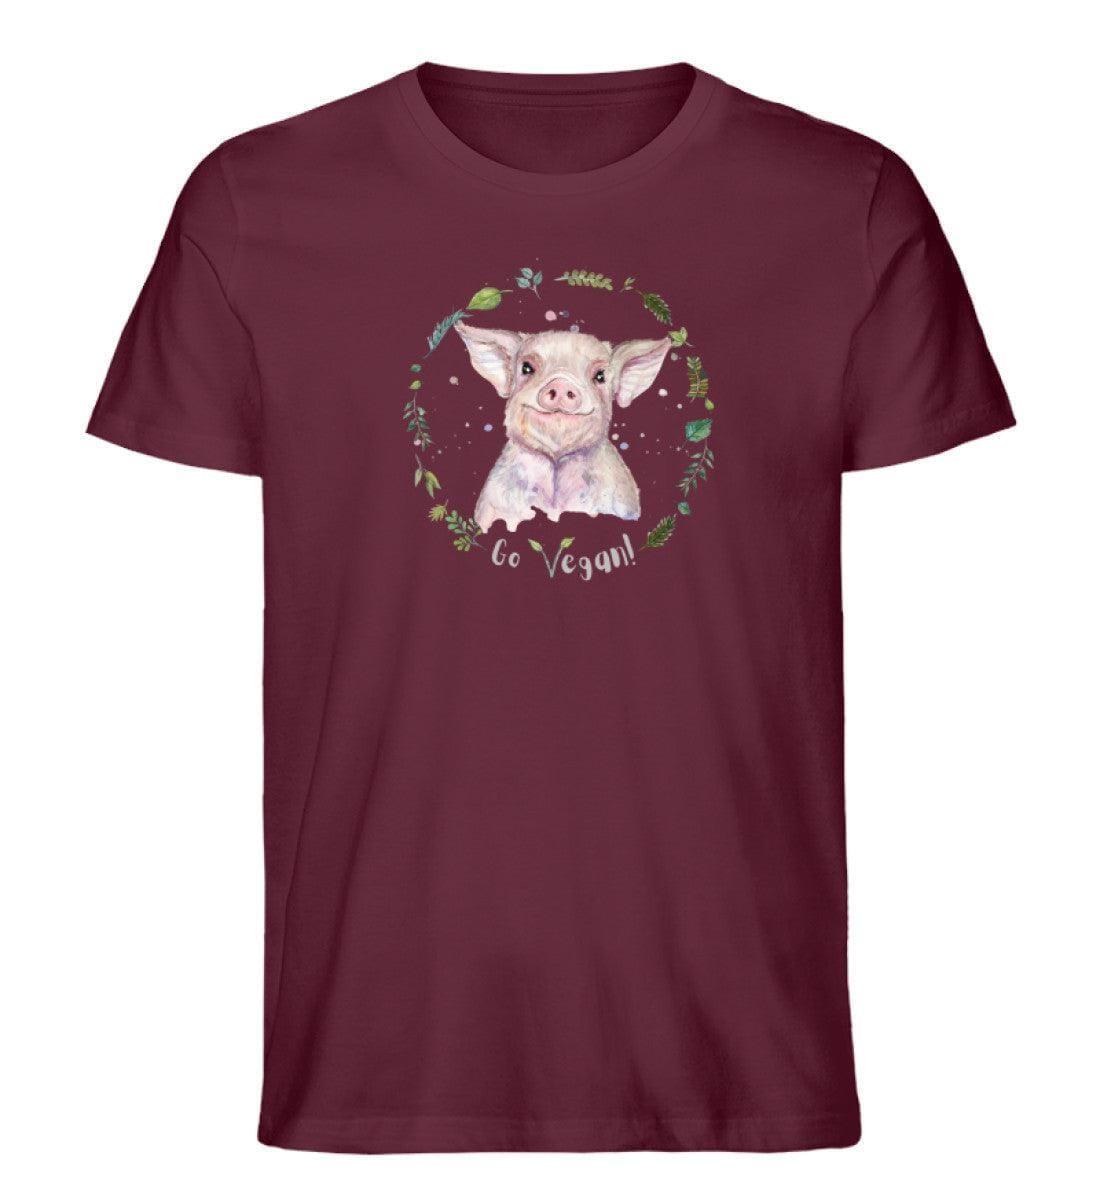 Go Vegan! [Svenja Rakel] - Unisex Organic Shirt Rocker T-Shirt ST/ST Shirtee Burgundy S 